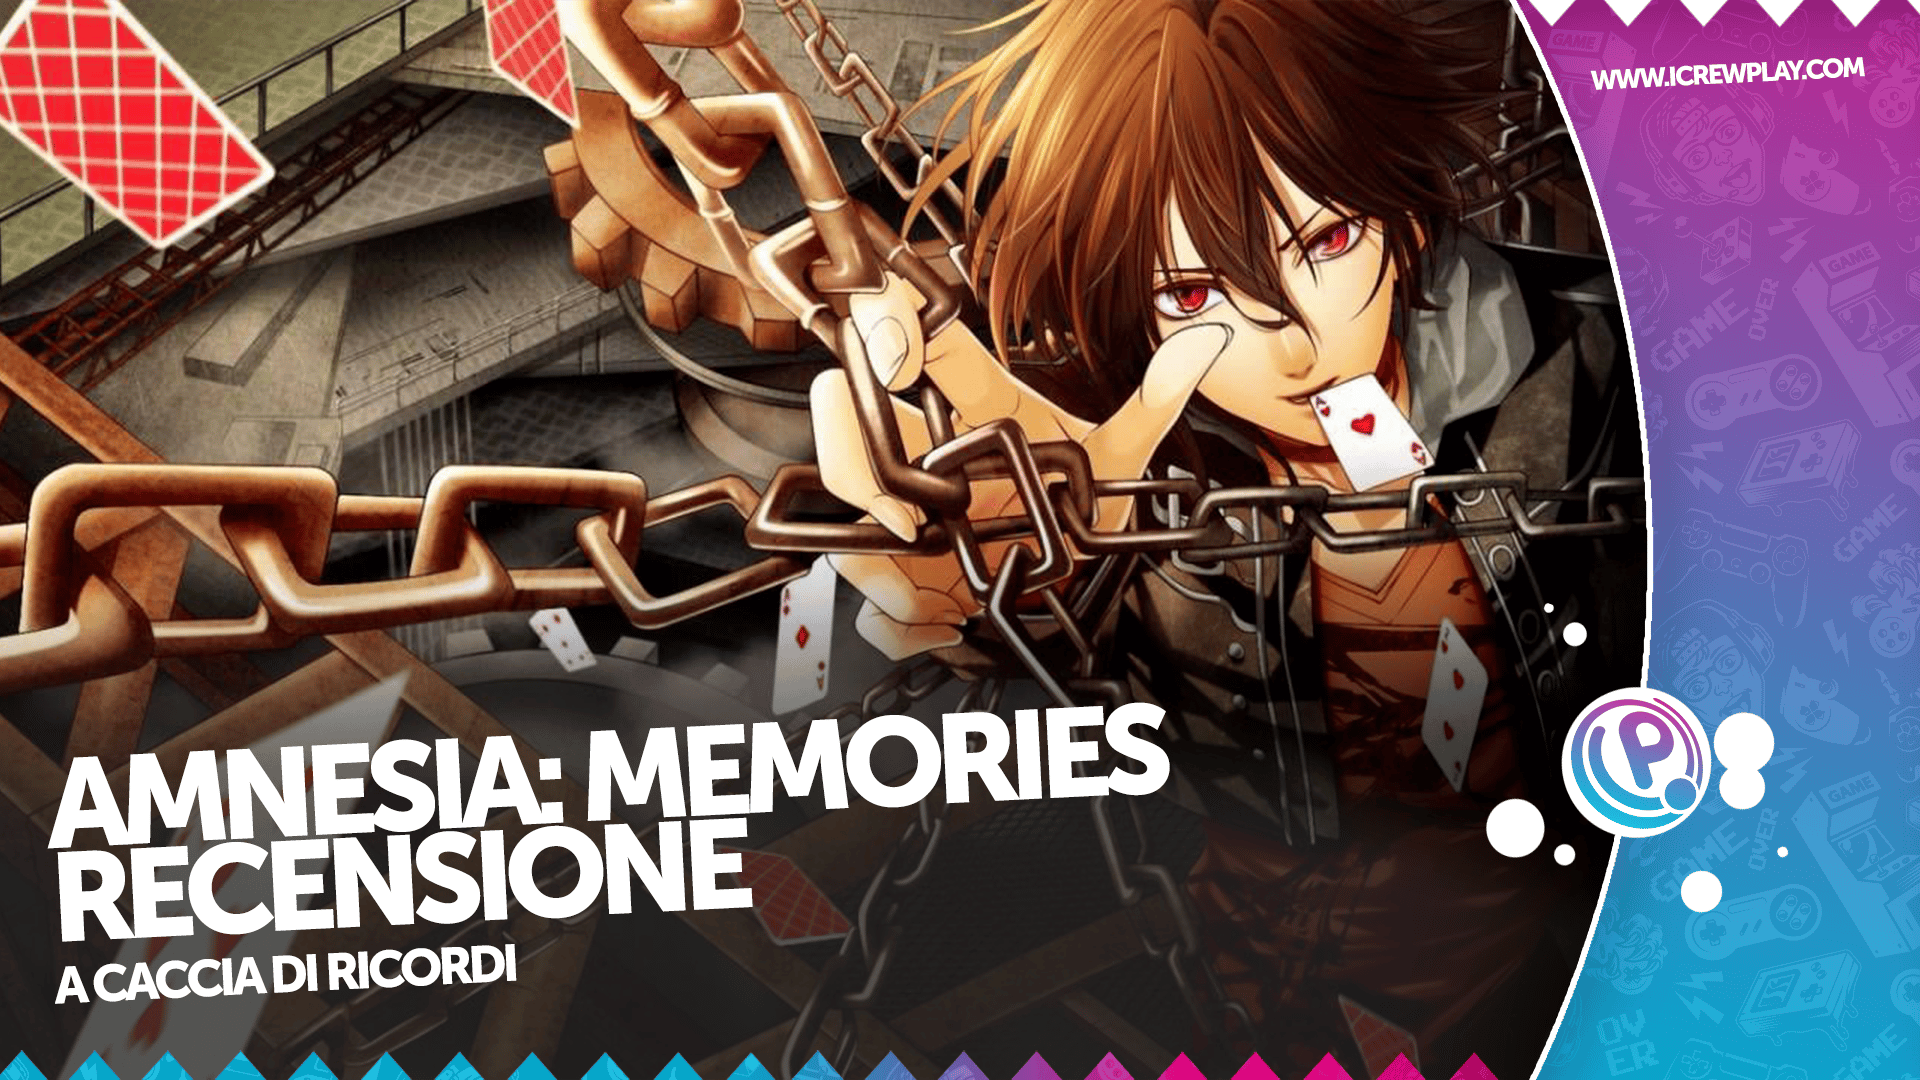 Amnesia: Memories recensione per Nintendo Switch 26